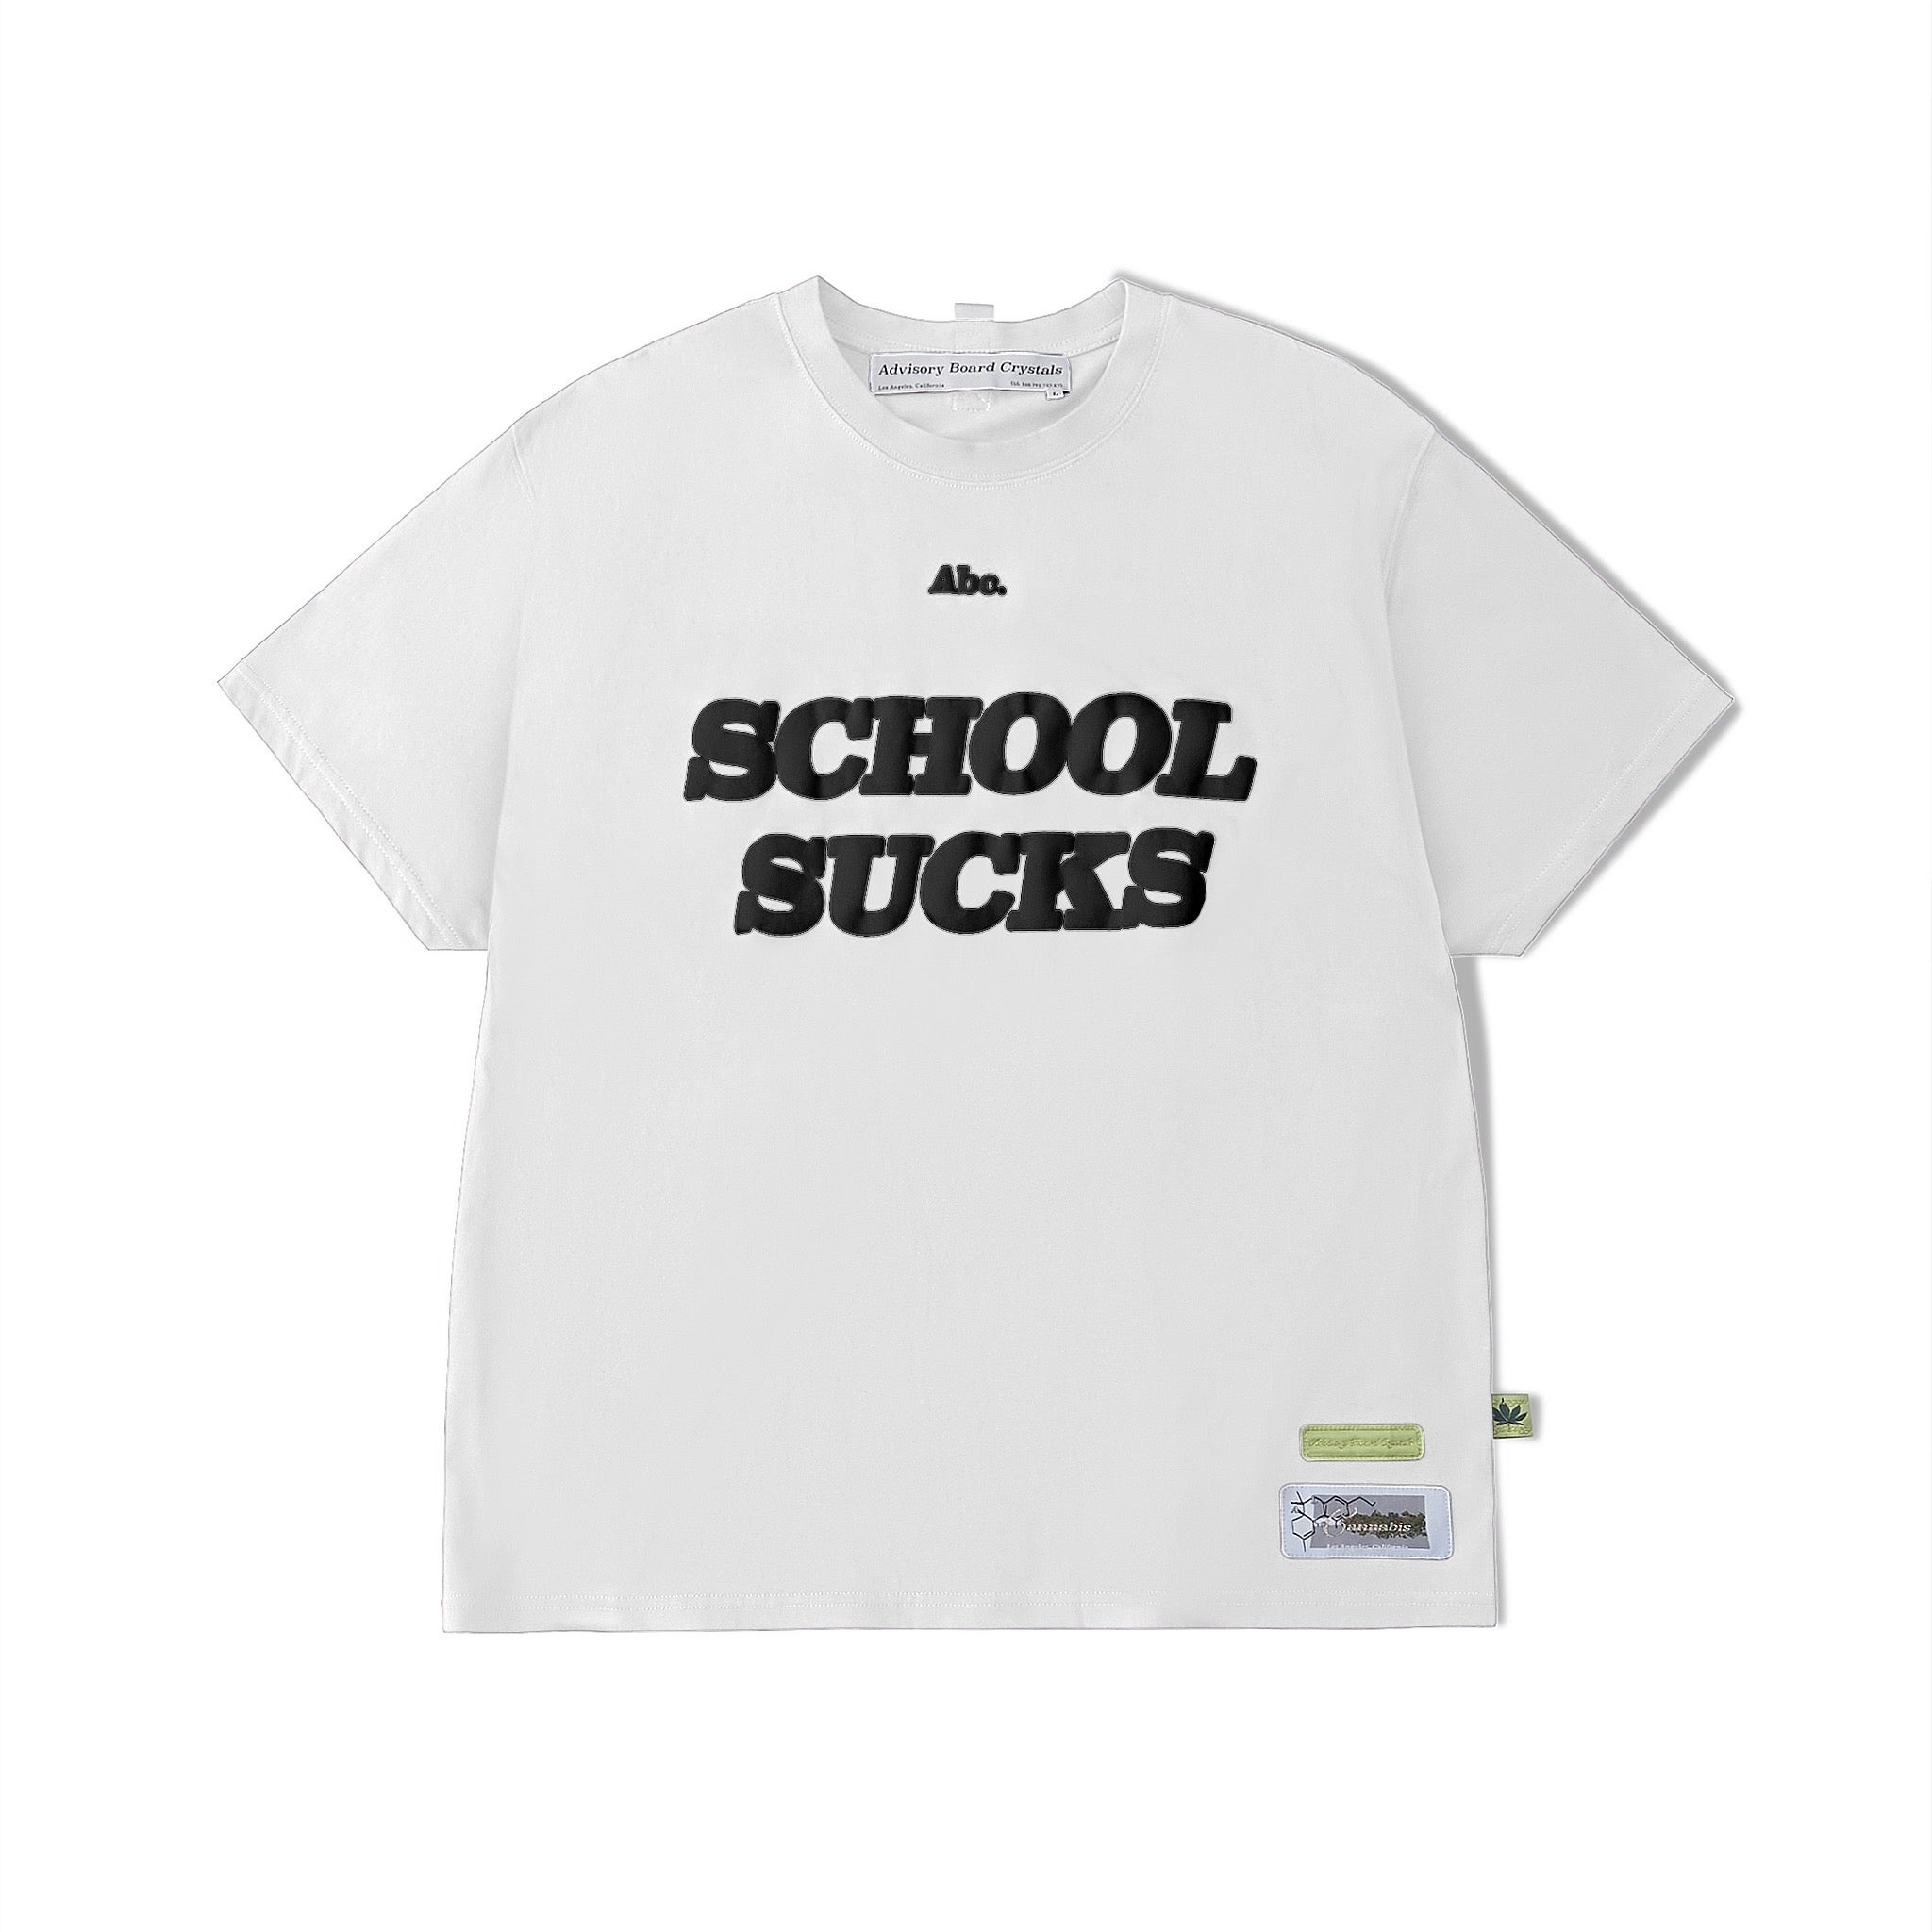 Abc. School Sucks T-Shirt